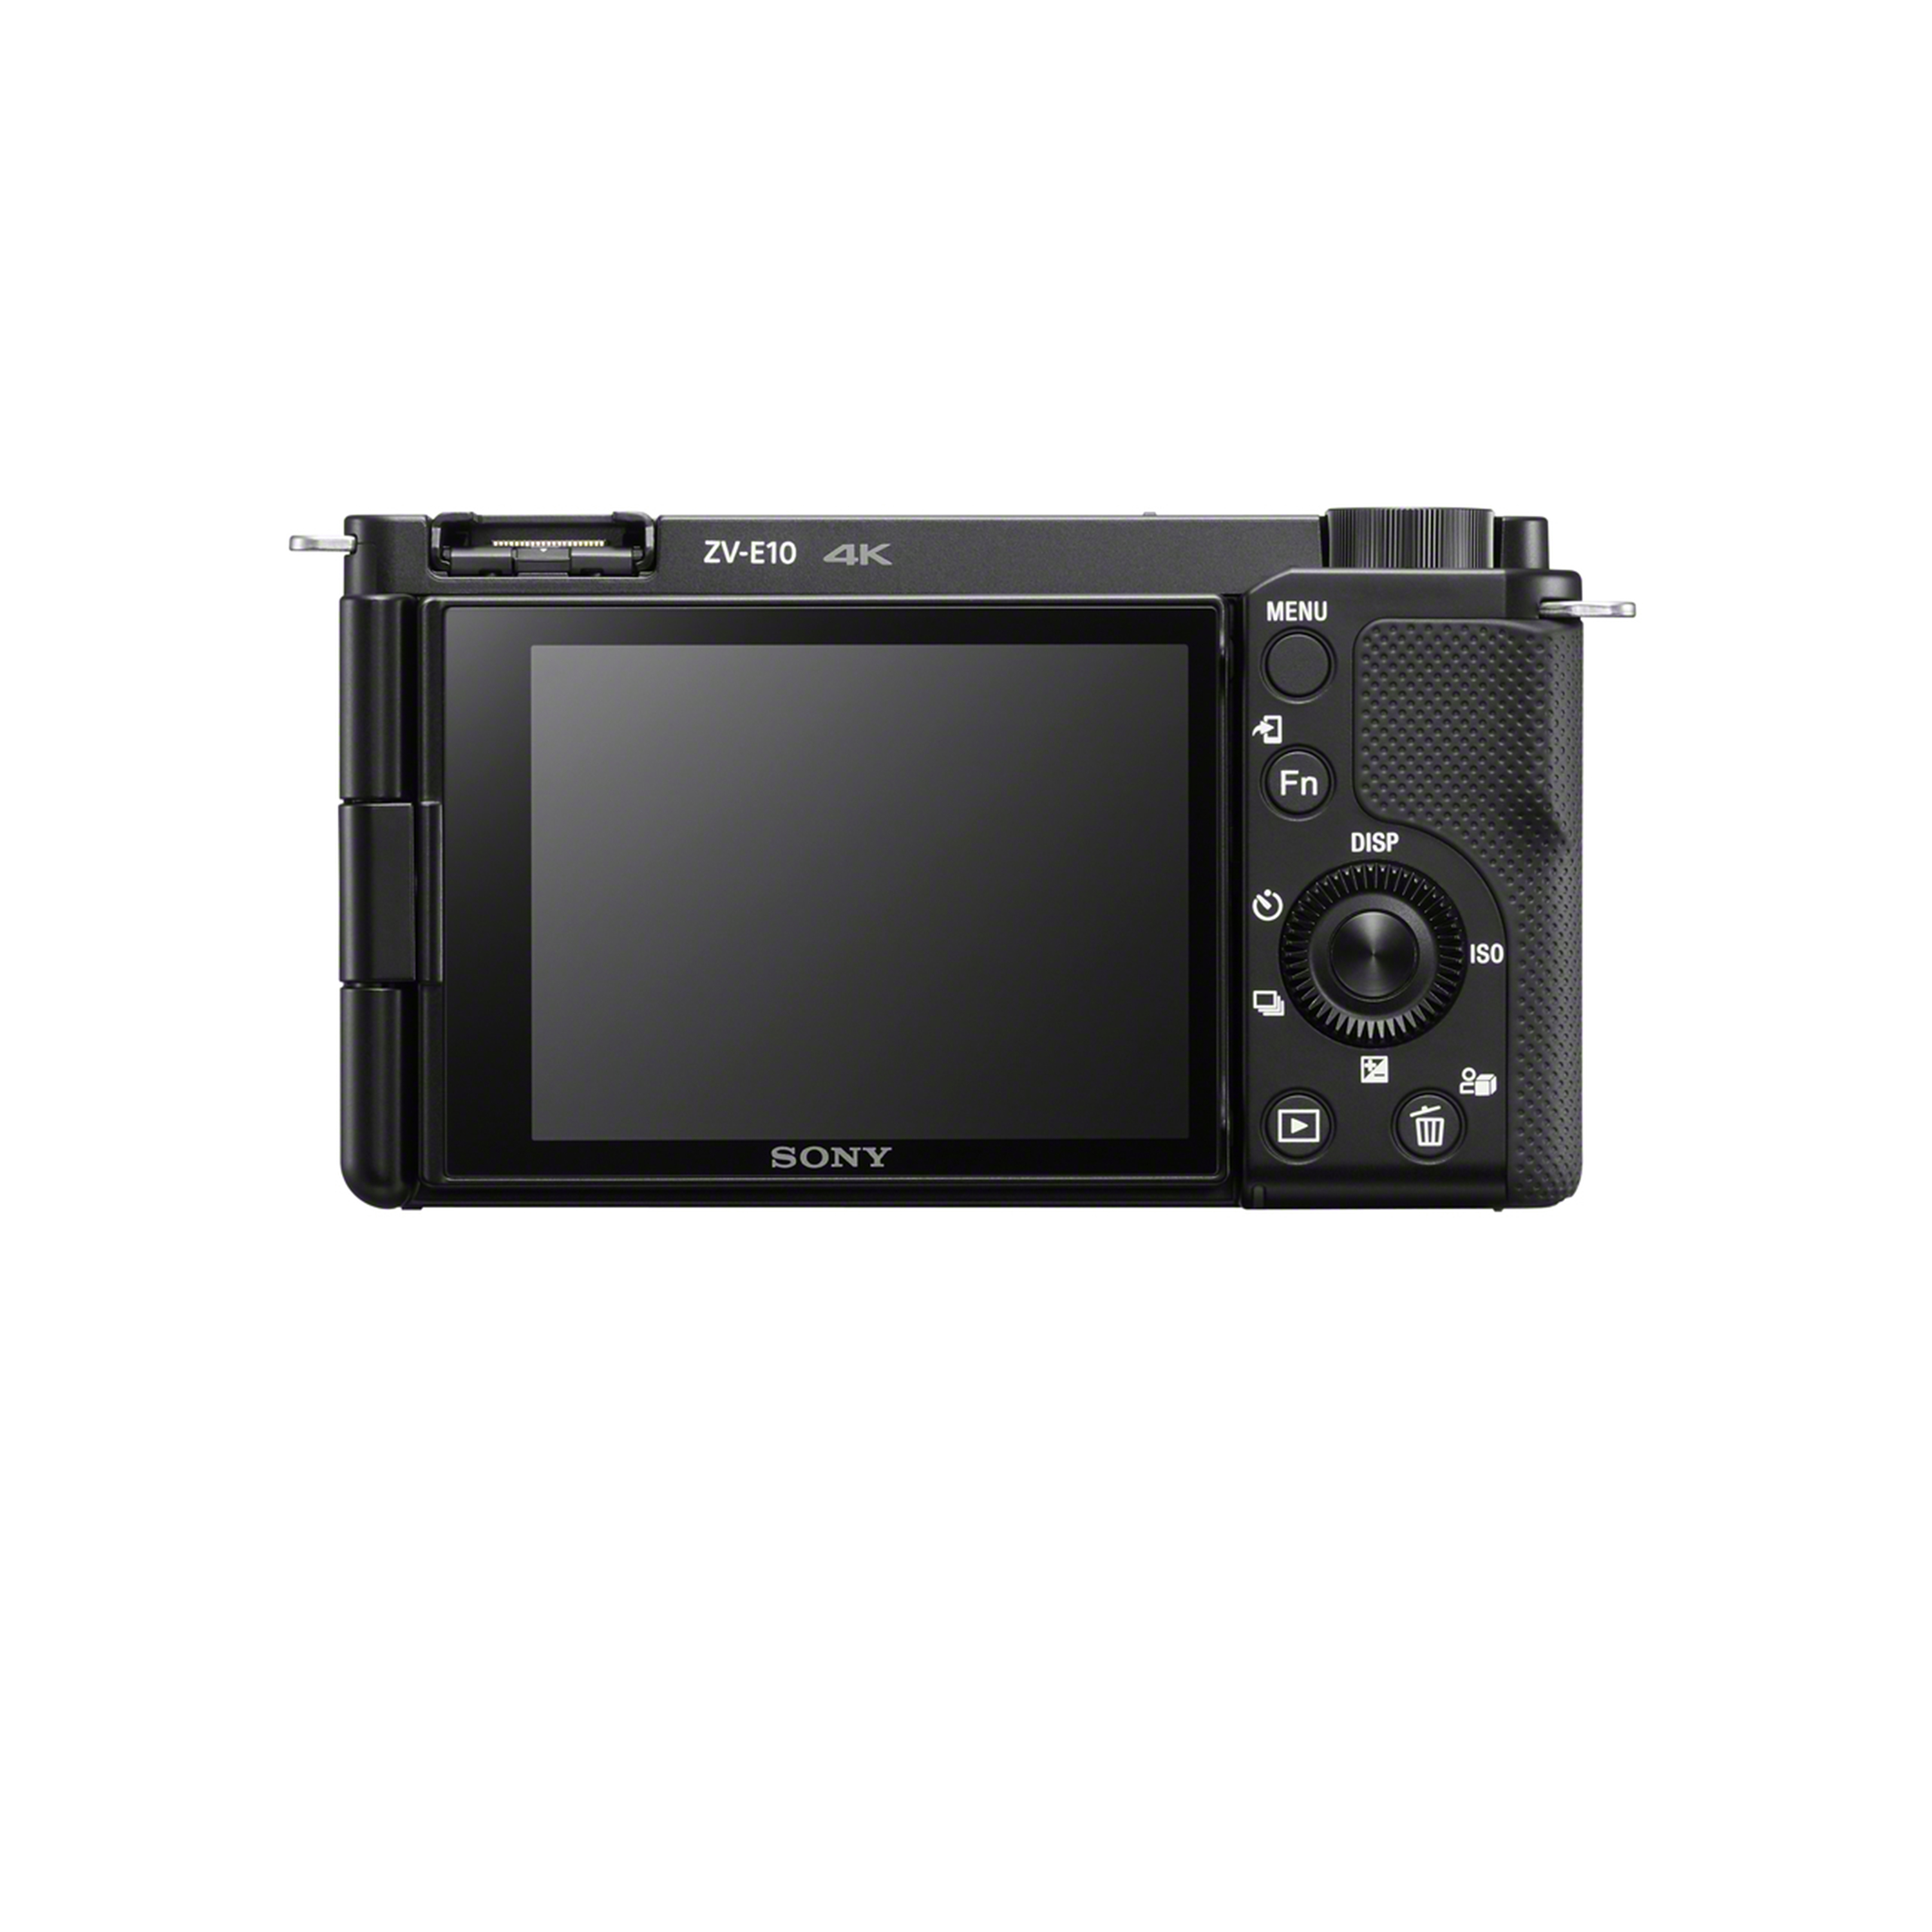 ZV-E10 - 數位單眼相機(白) - Sony 台灣官方購物網站- Sony Store